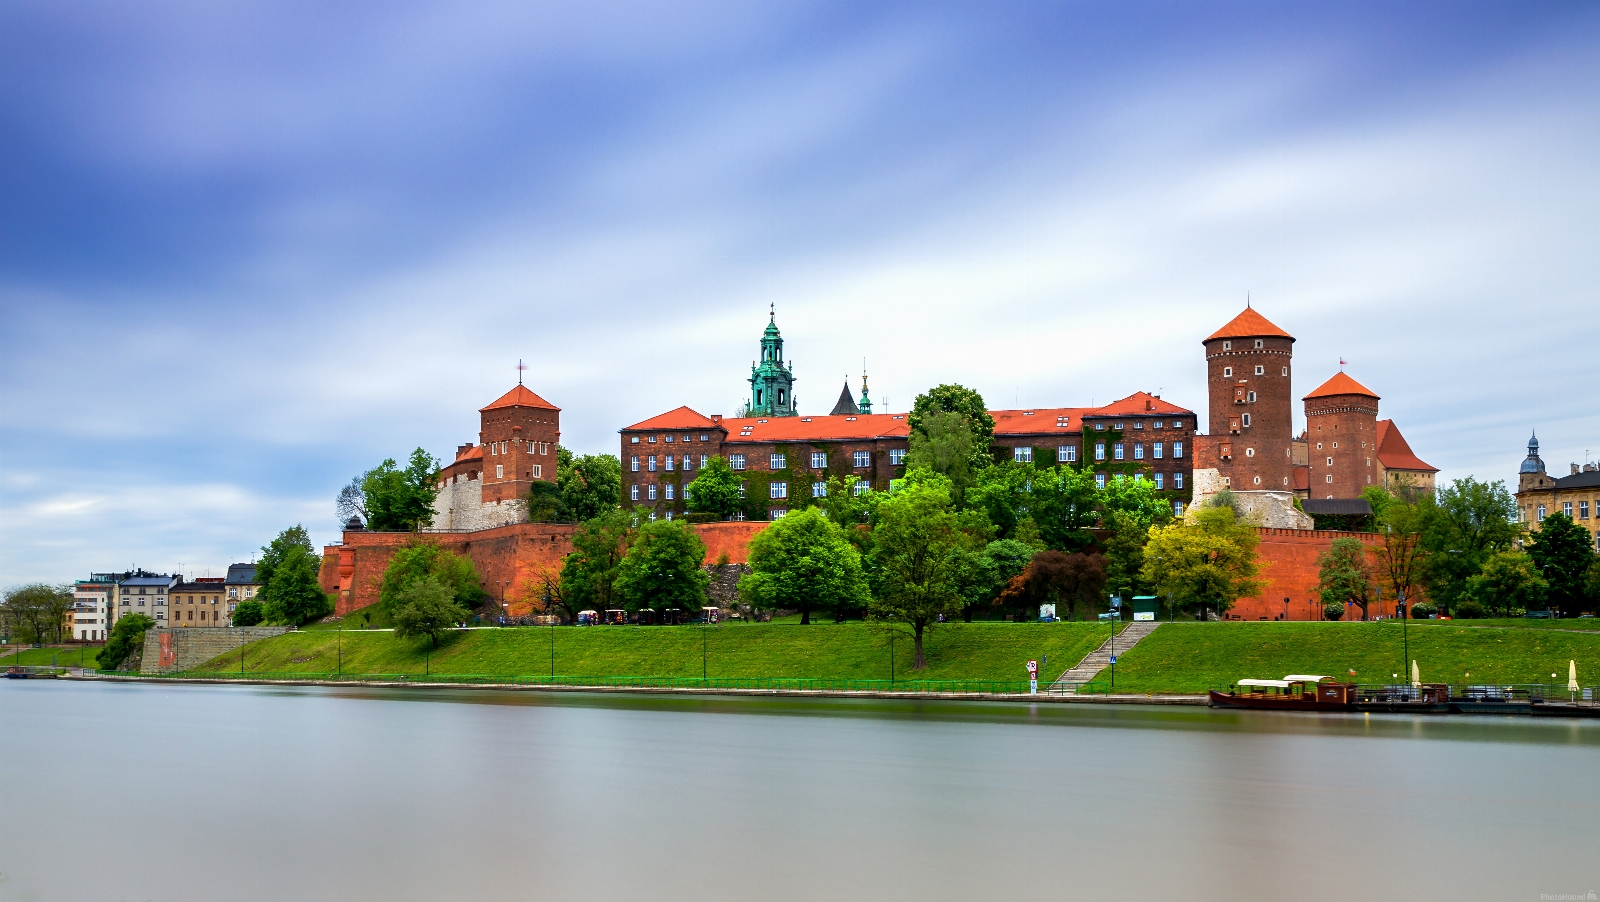 Image of Wawel Castle and Vistula River by Adelheid Smitt